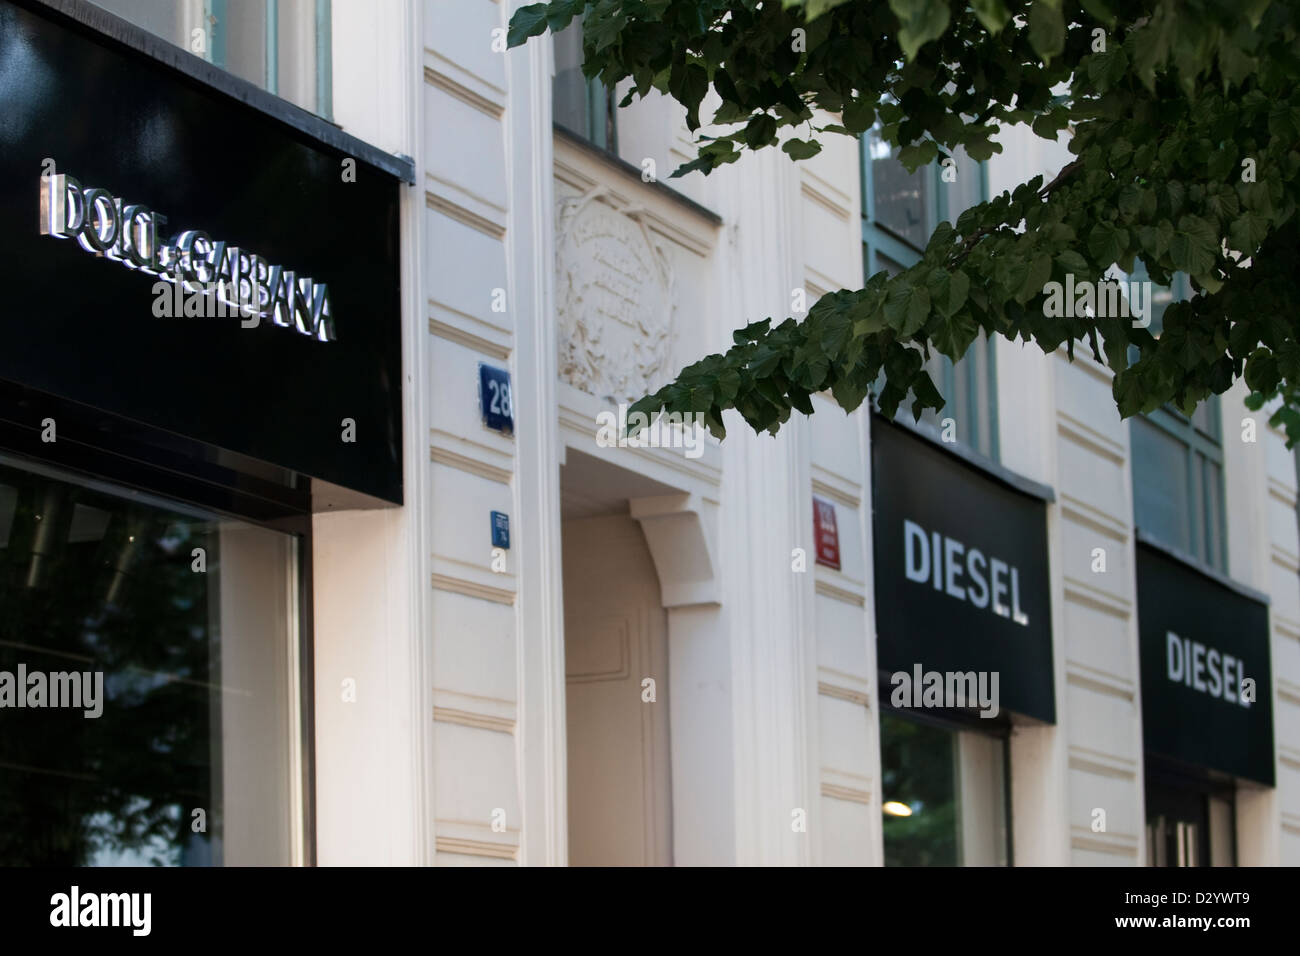 Dolce and Gabbana, Diesel, stores in Parizska Street in Prague, Czech  Republic on June 18, 2012. (CTK Photo/Krystof Kriz Stock Photo - Alamy